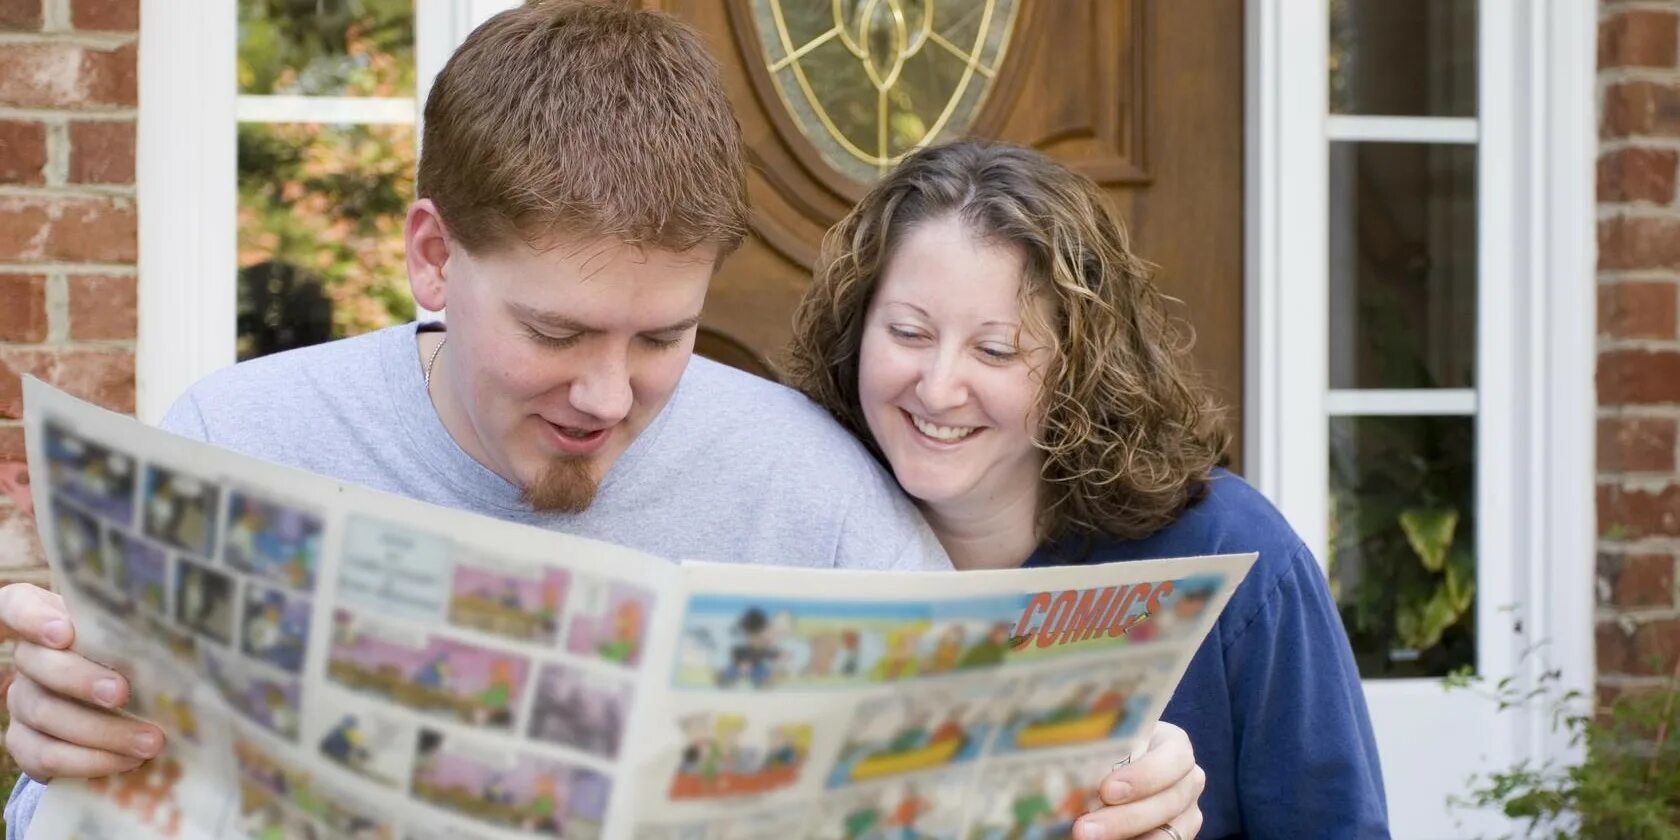 Фото через газету. Читает газету. Семья читает газету. Читаем газету вместе. Читать газету толстушку